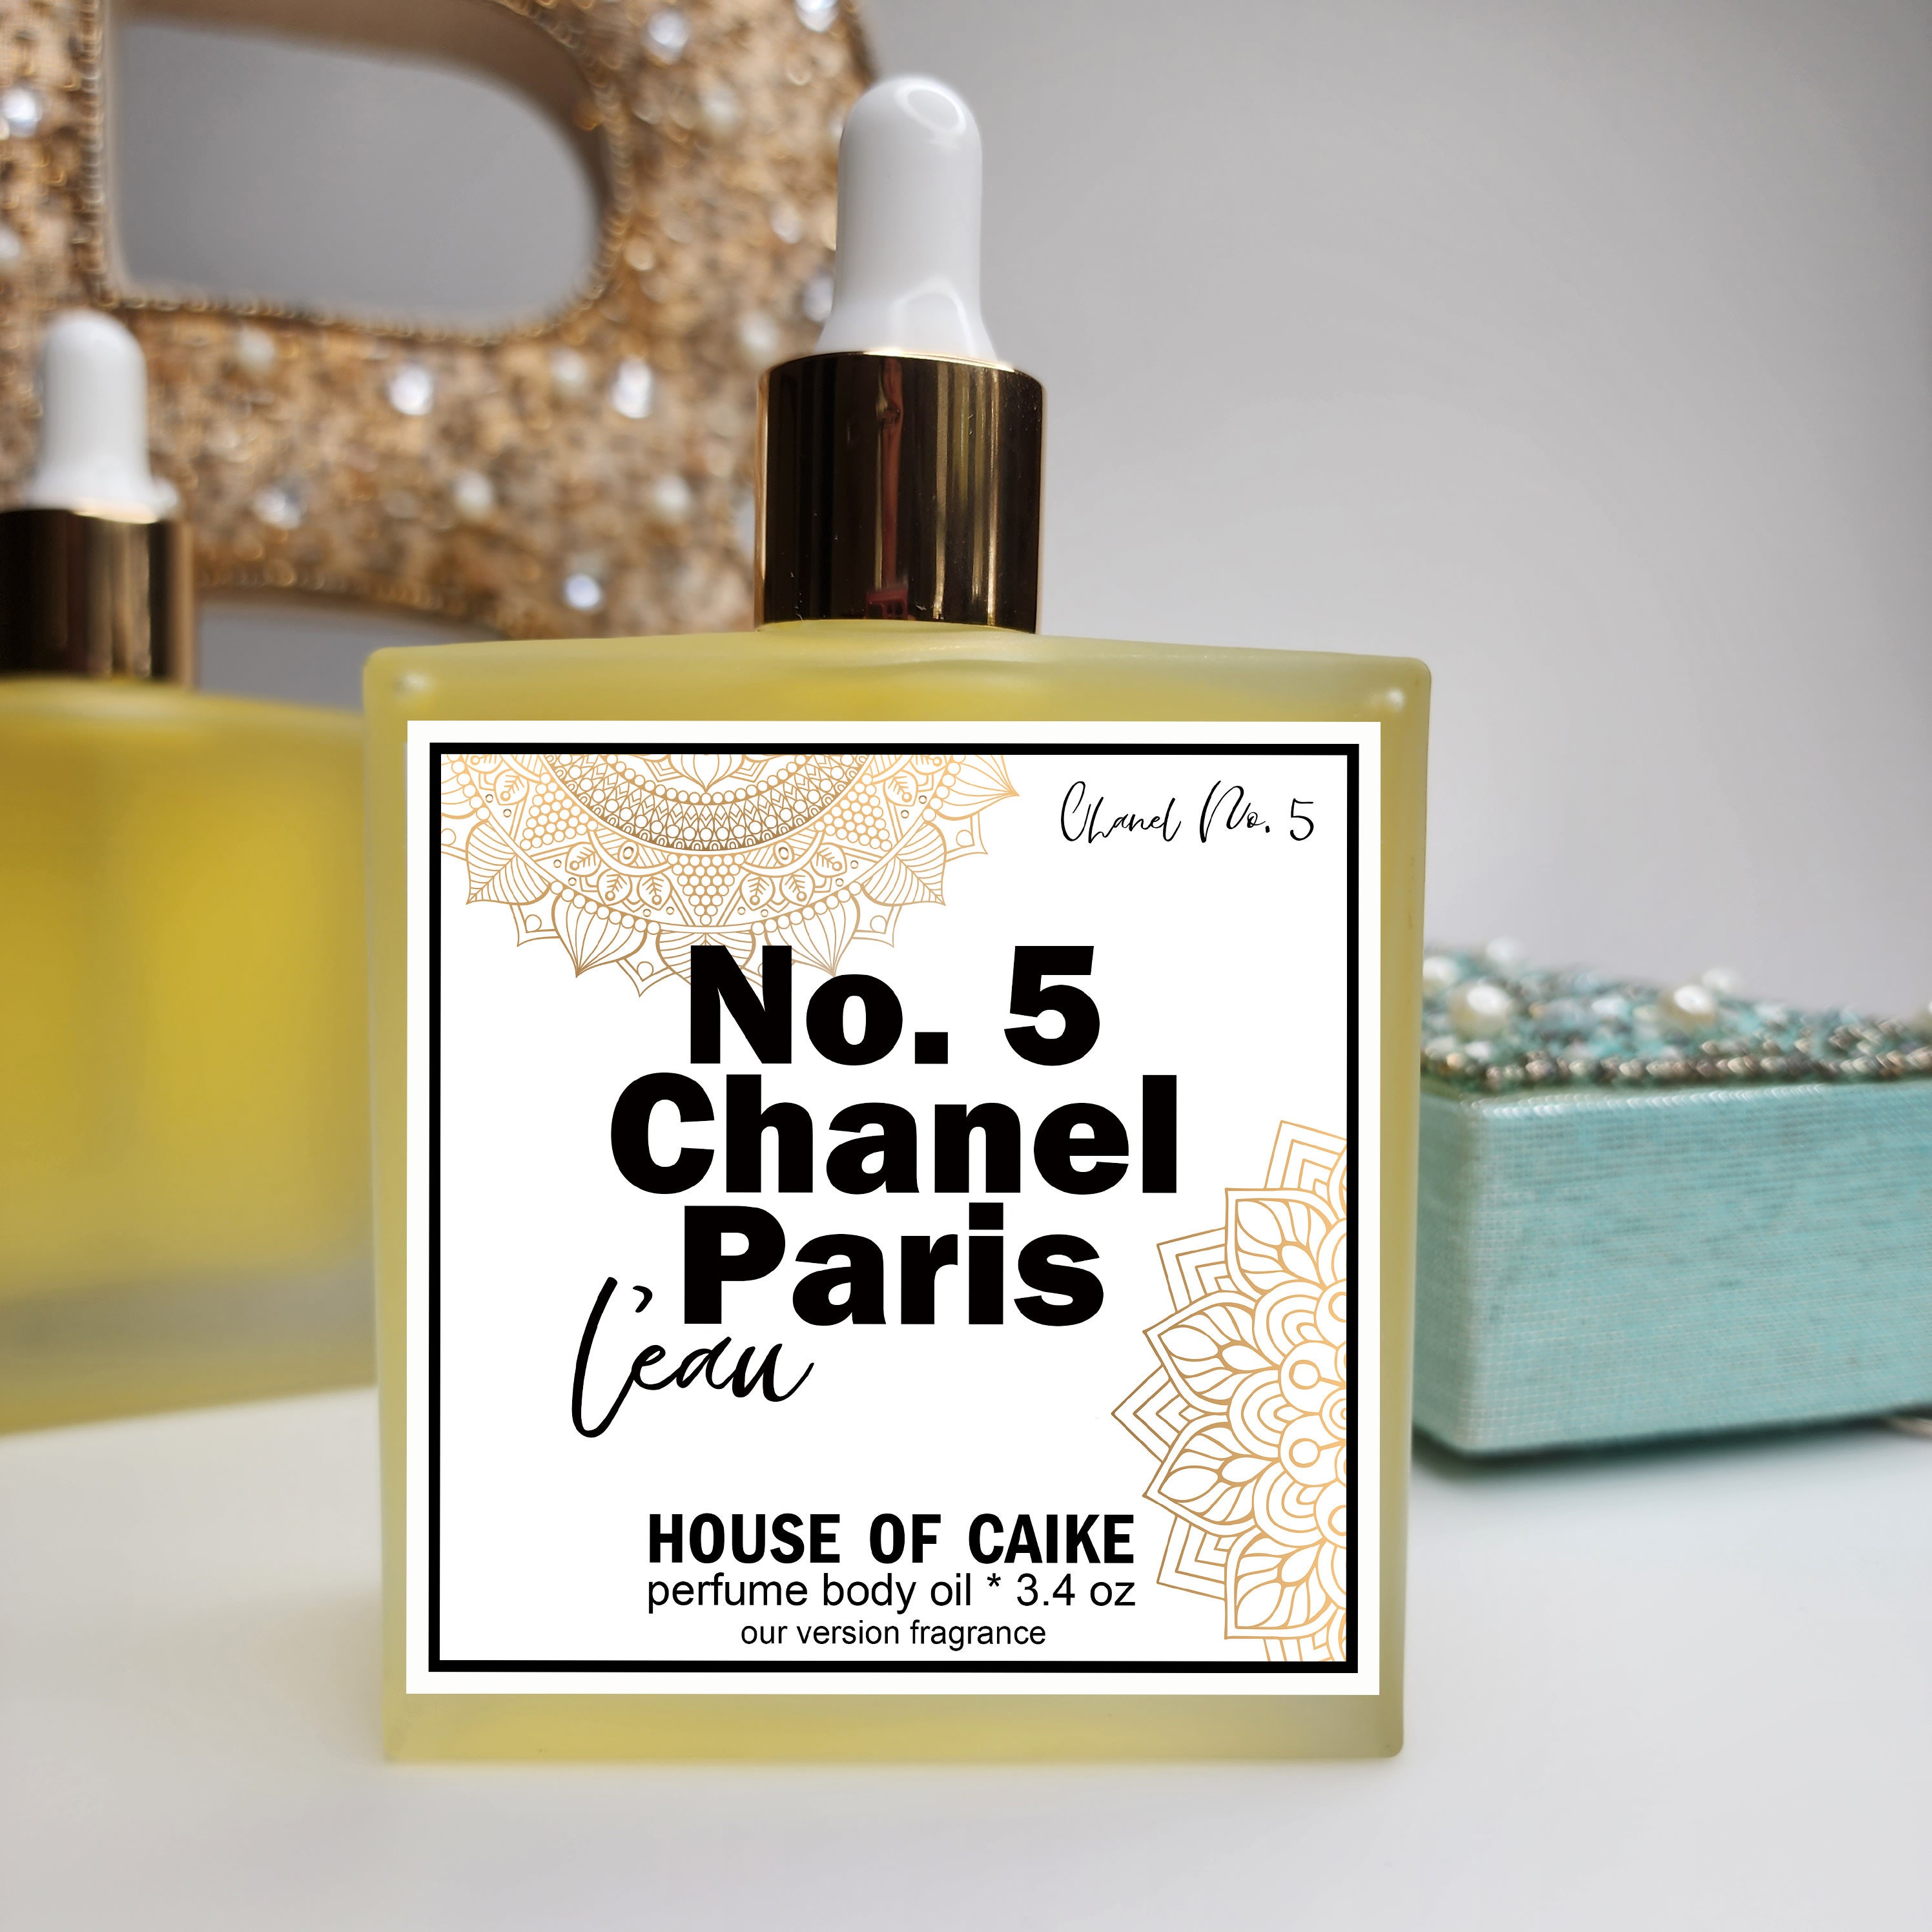 CHANEL NO.5 L'EAU Perfume Body Oil. Impressions of Chanel 